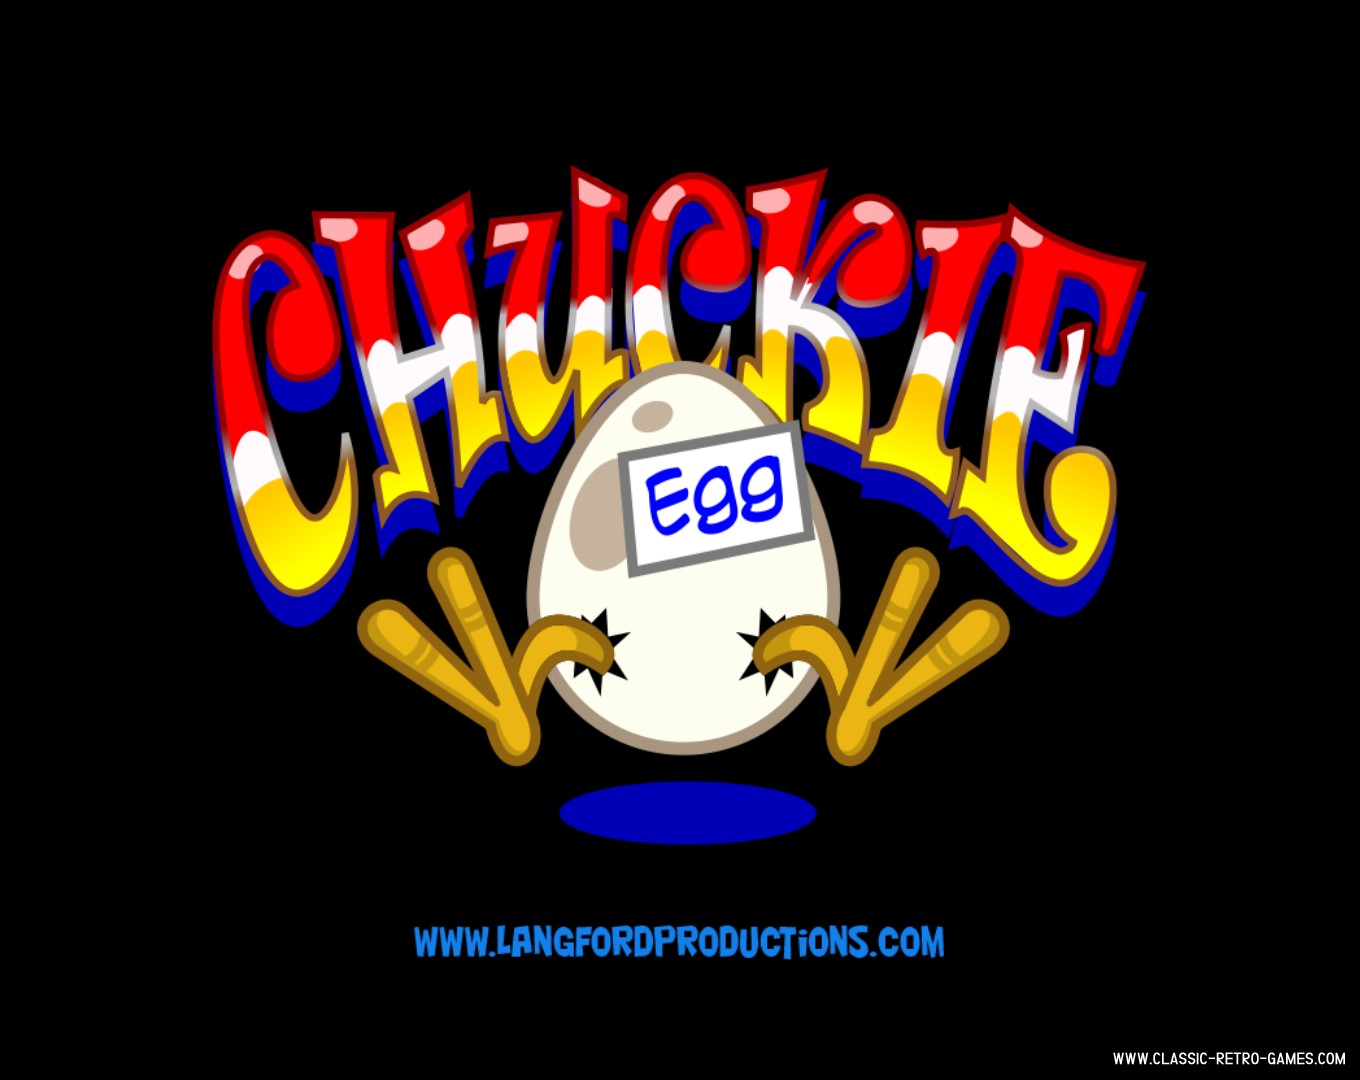 Chuckie Egg remake screenshot